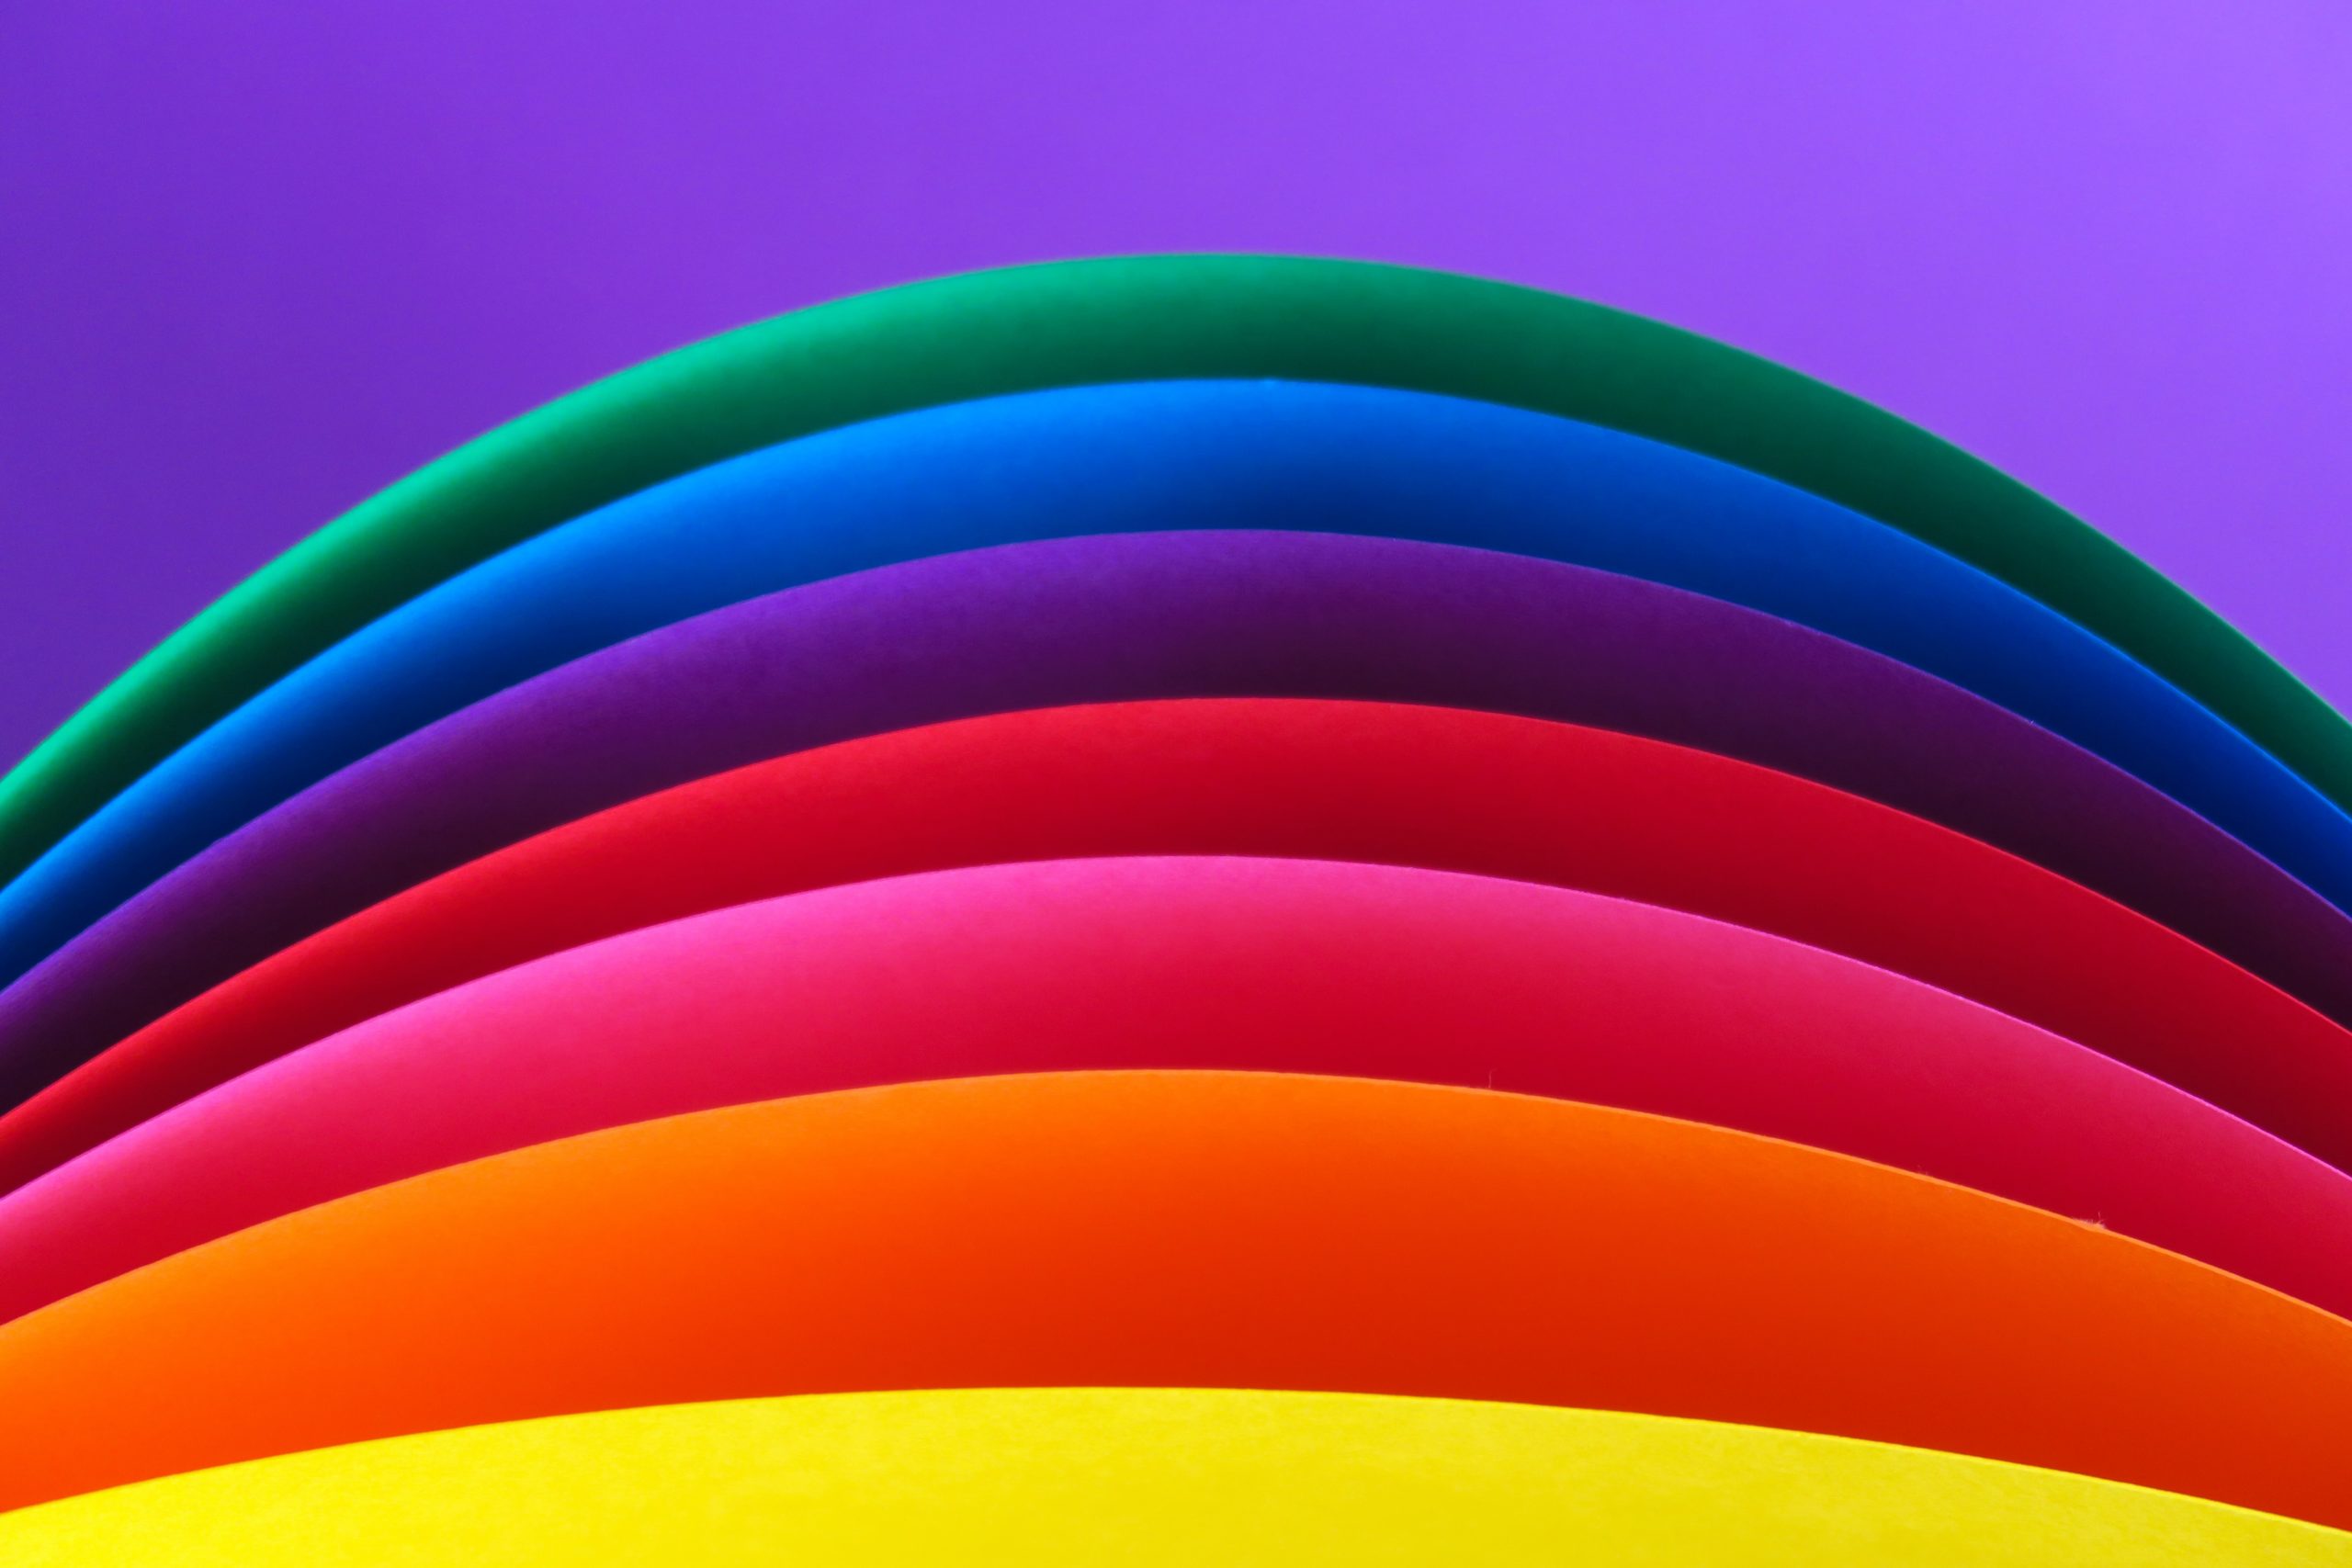 A rainbow on a purple background.